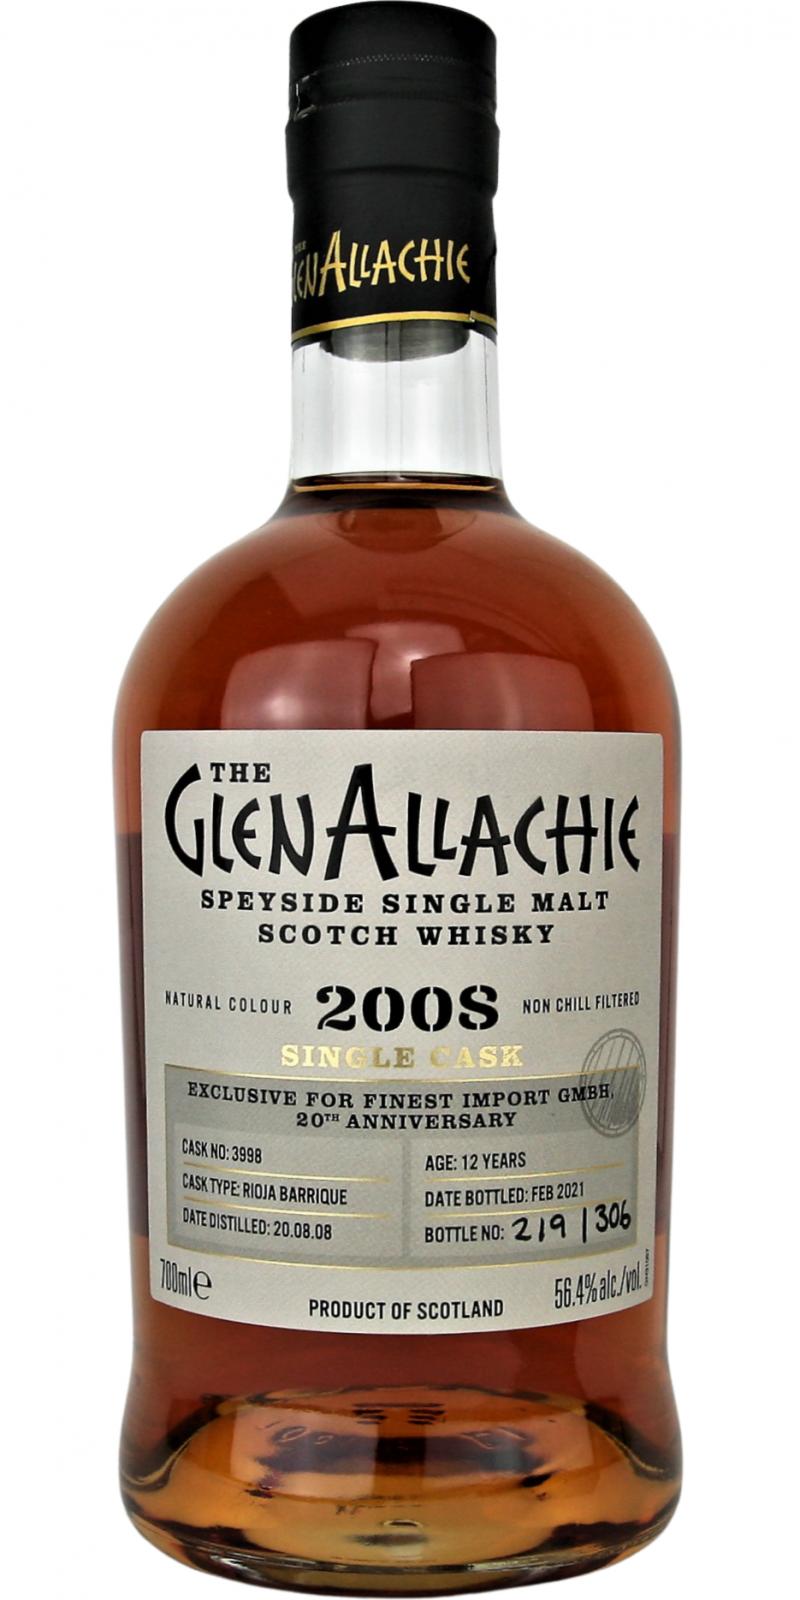 Glenallachie 2008 Single Cask Rioja Barrique #3998 Finest Import GmbH 20th Anniversary 56.4% 700ml